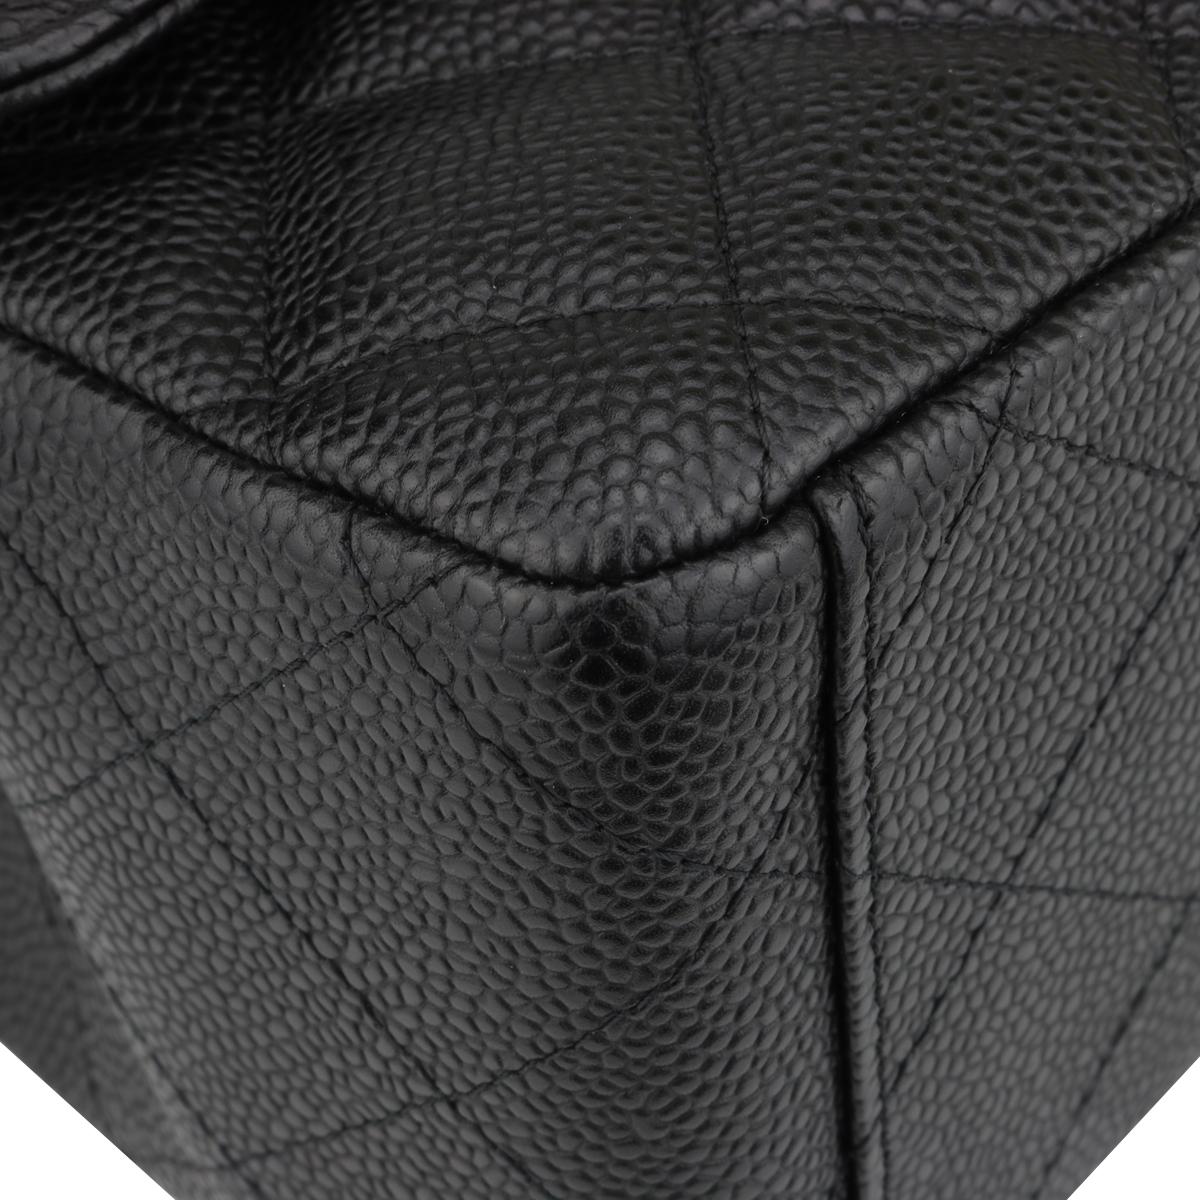 CHANEL Single Flap Maxi Bag Black Caviar with Silver Hardware 2010 1